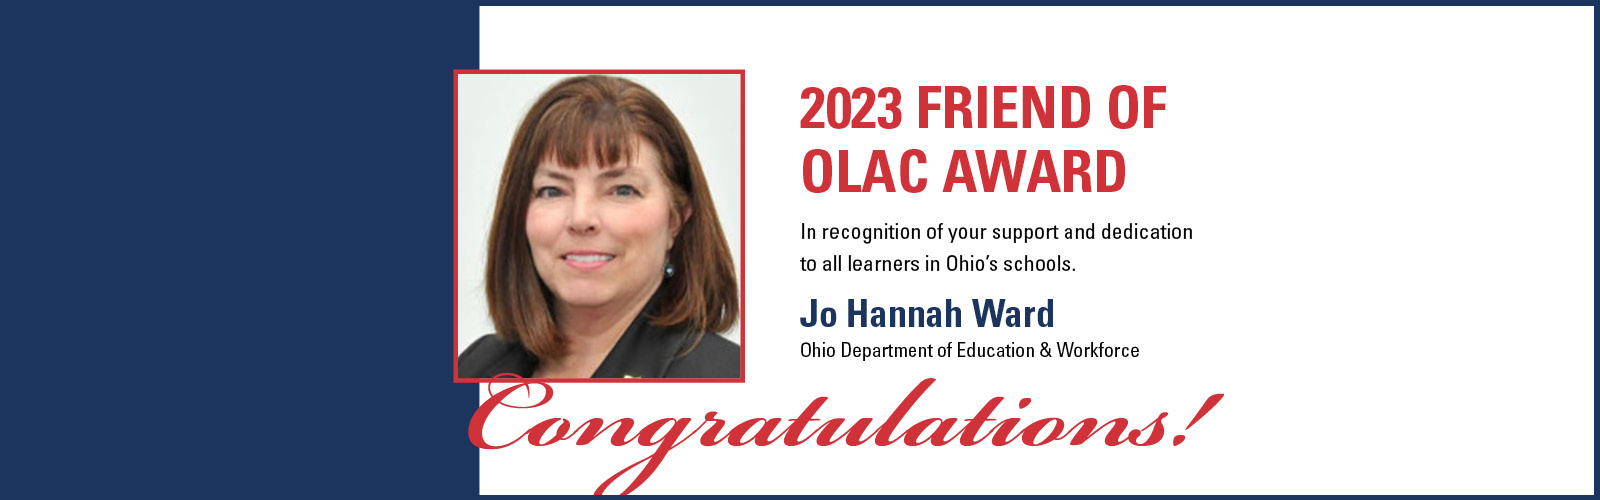 2023 Friend of OLAC Award Jo Hannah Ward